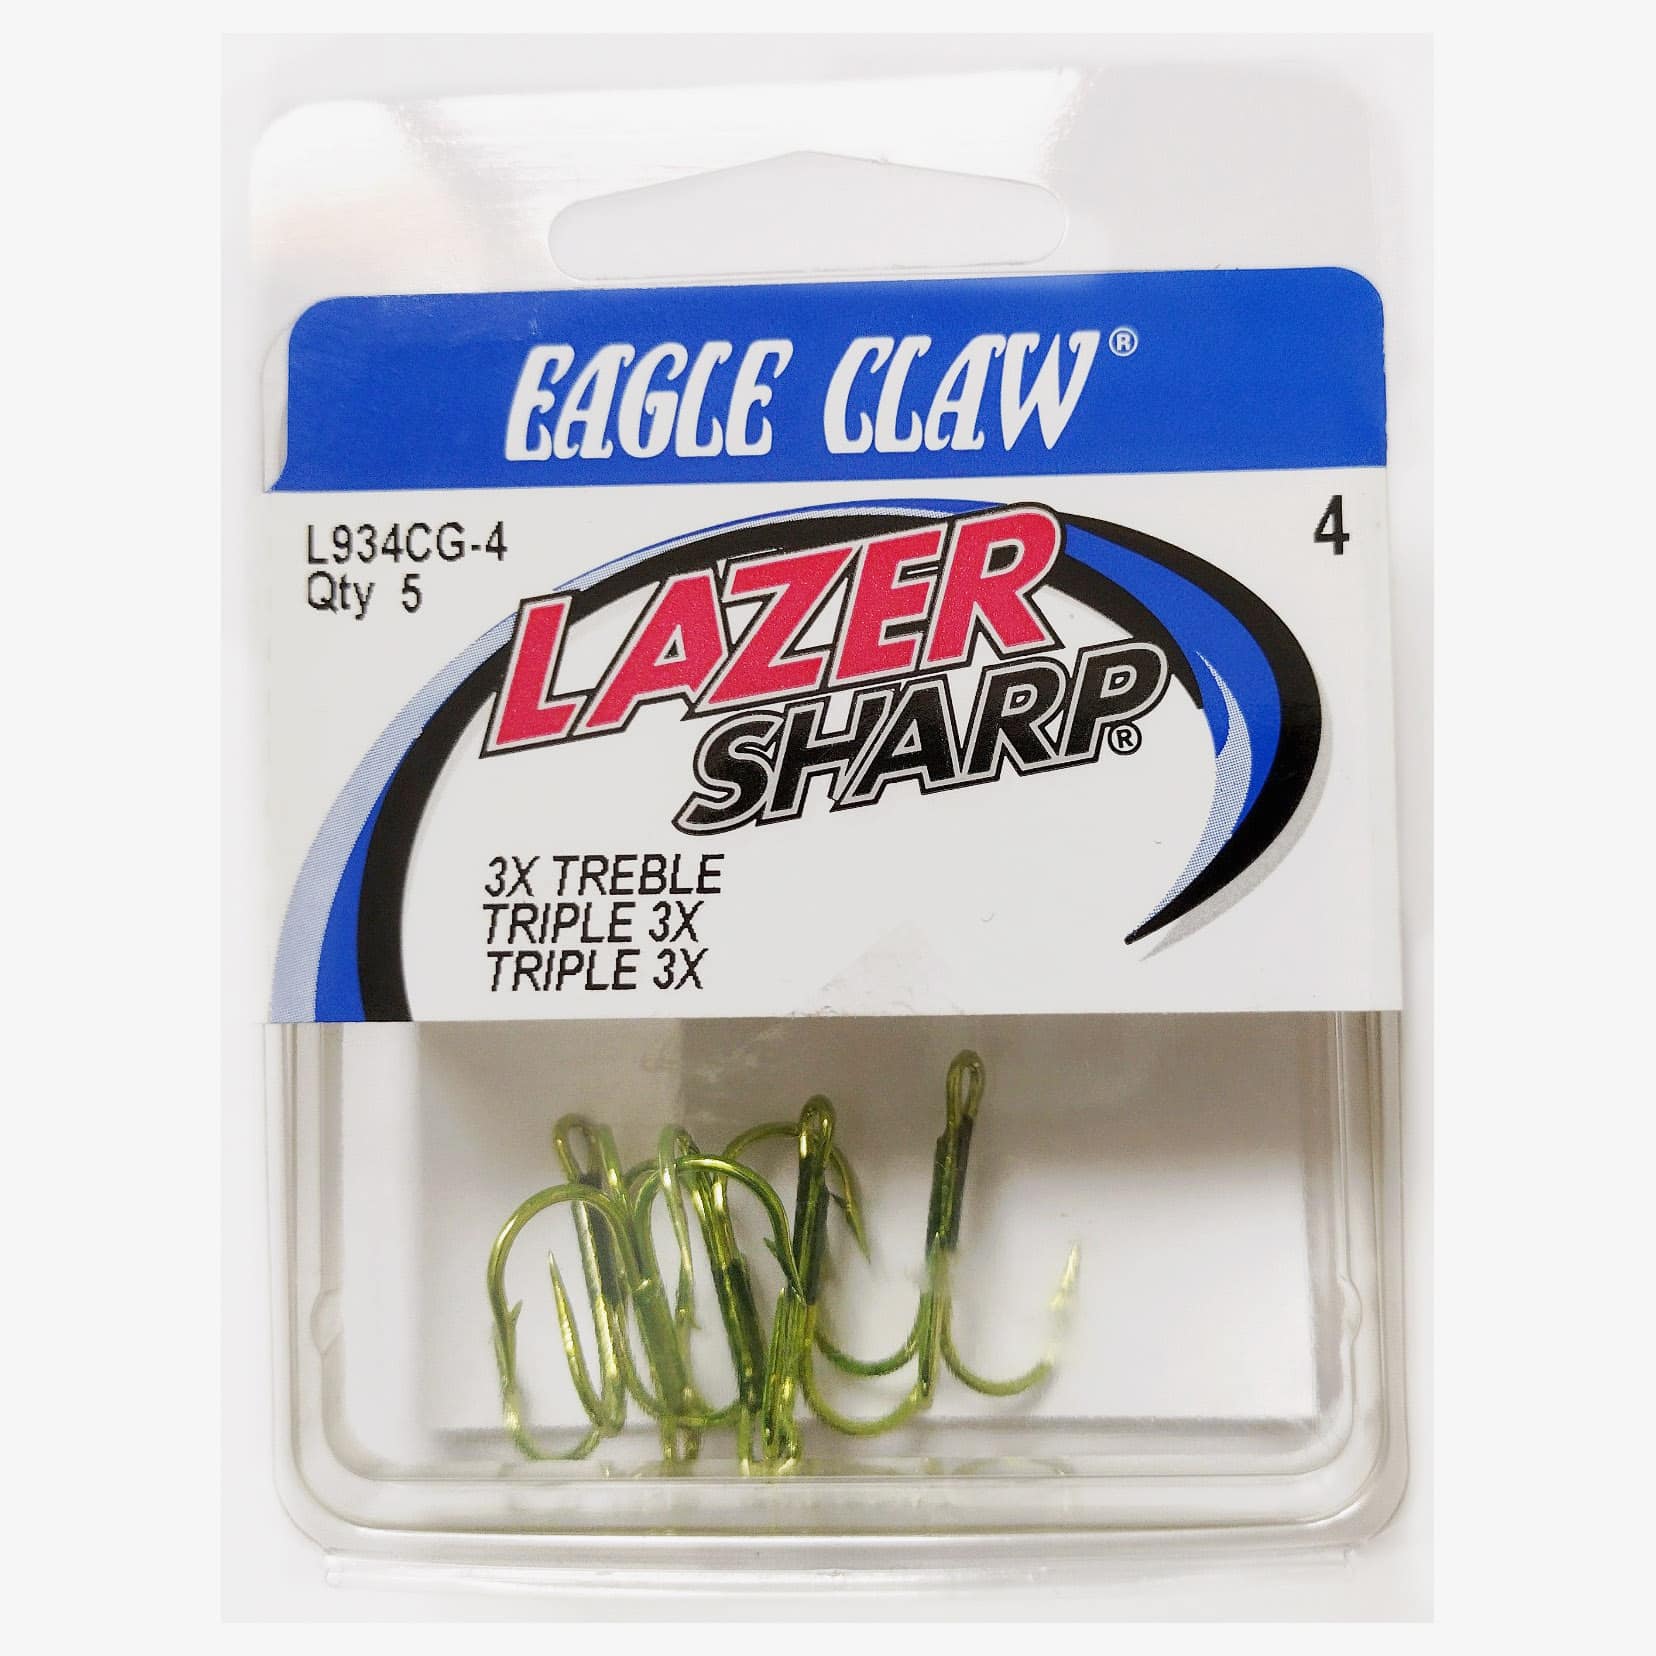 CLOSEOUT* EAGLE CLAW GREEN LAZER SHARP TREBLE HOOKS - SIZE 4